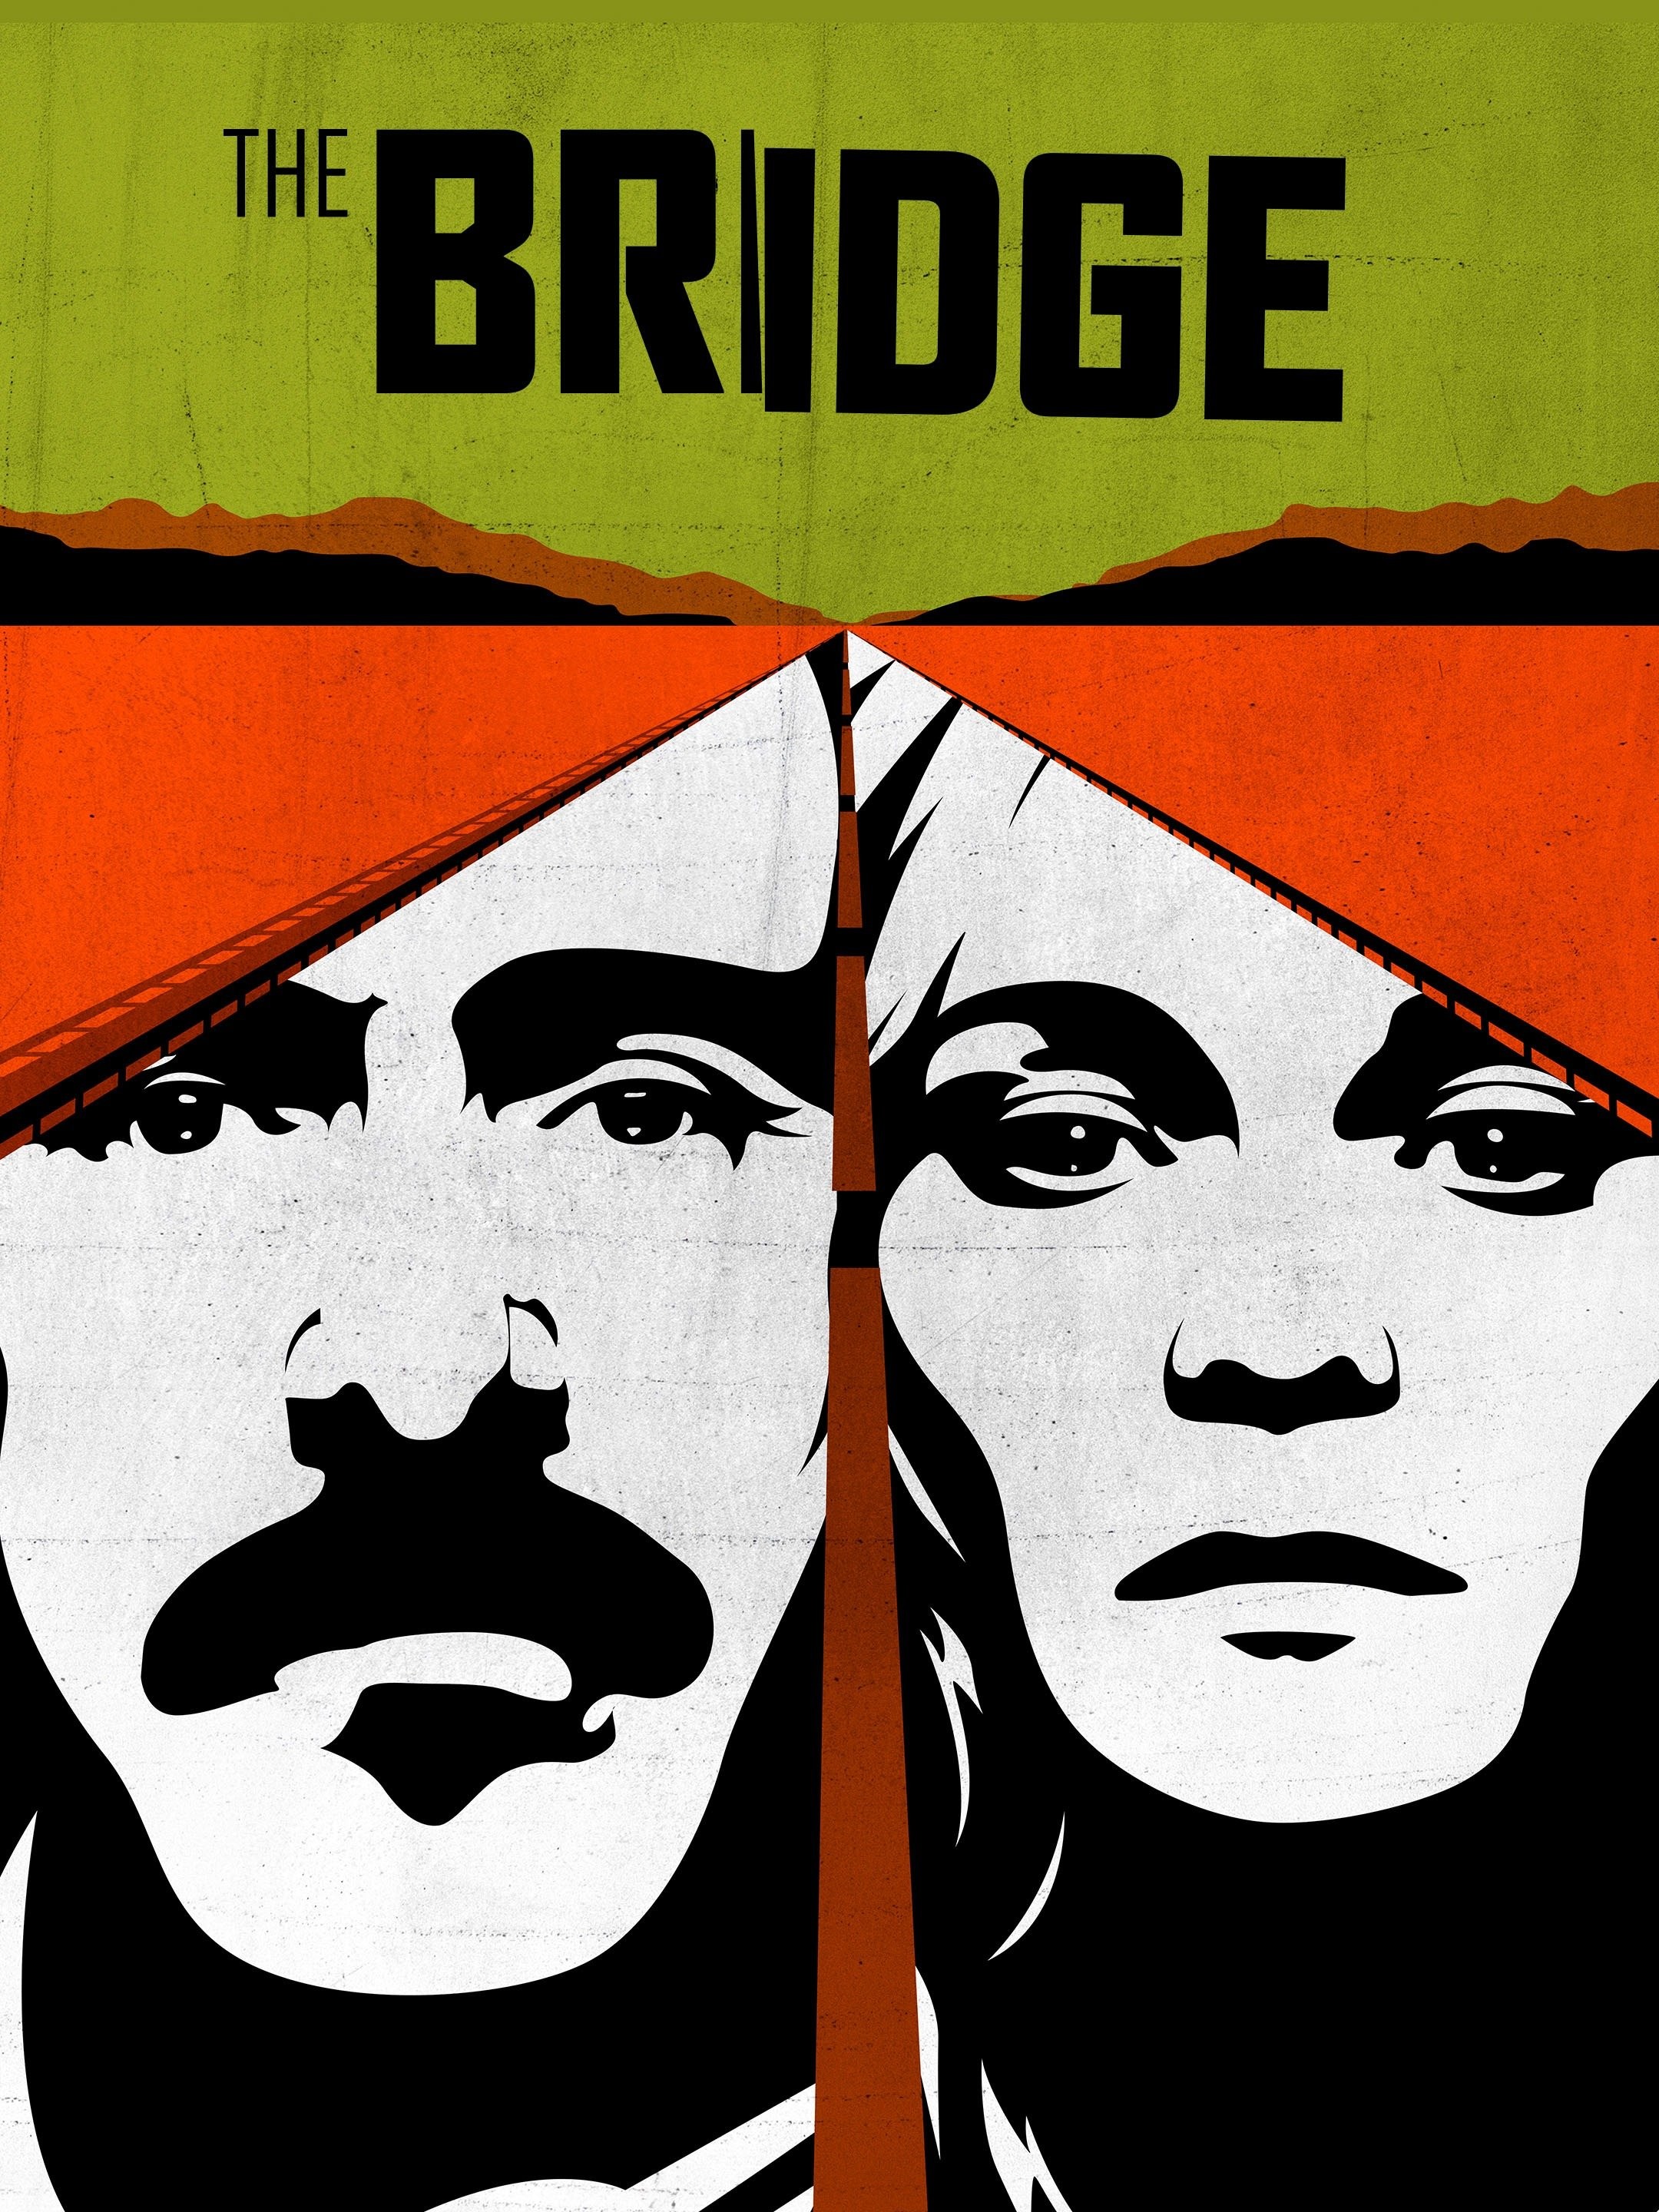 The Bridge (2013 TV series) - Wikipedia